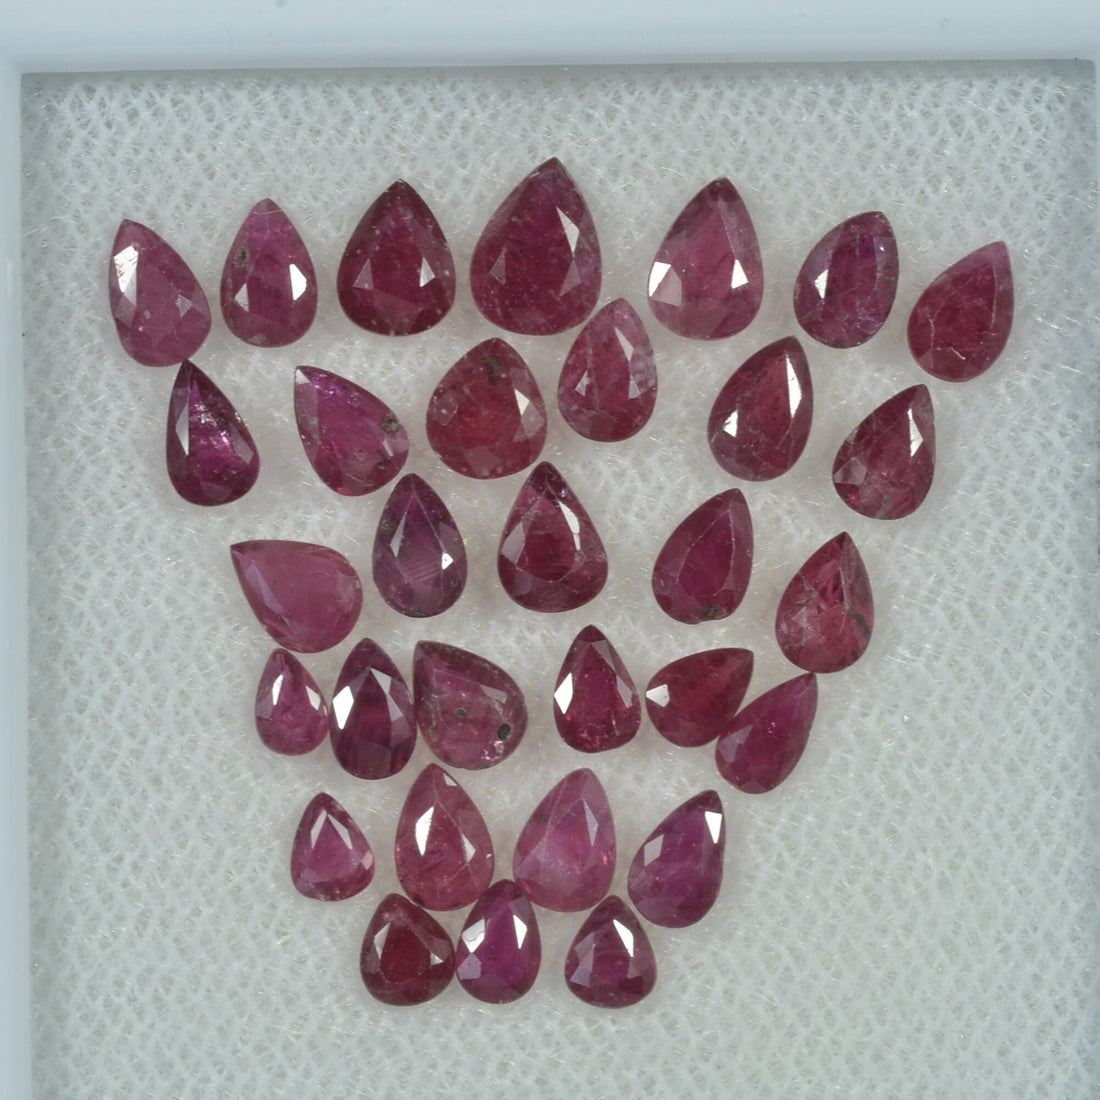 6.62 Cts Natural Ruby Loose Gemstone Pear Cut